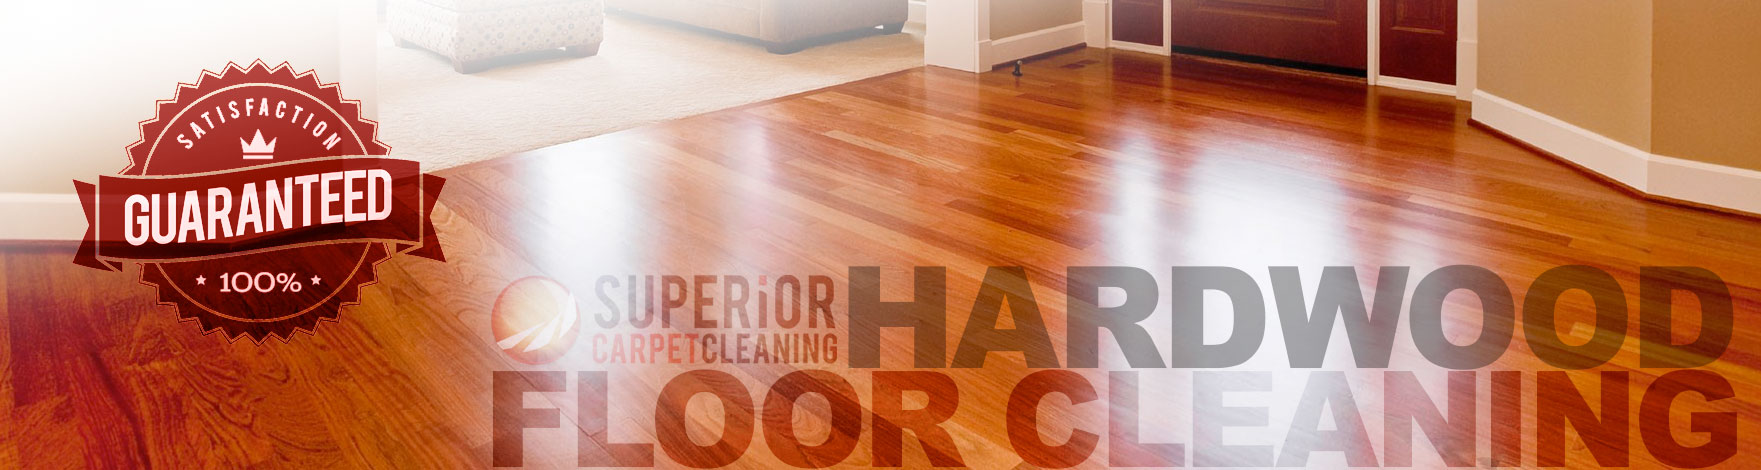 Hardwood Floor Cleaning Lexington Ky, Hardwood Floor Refinishing Northern Ky